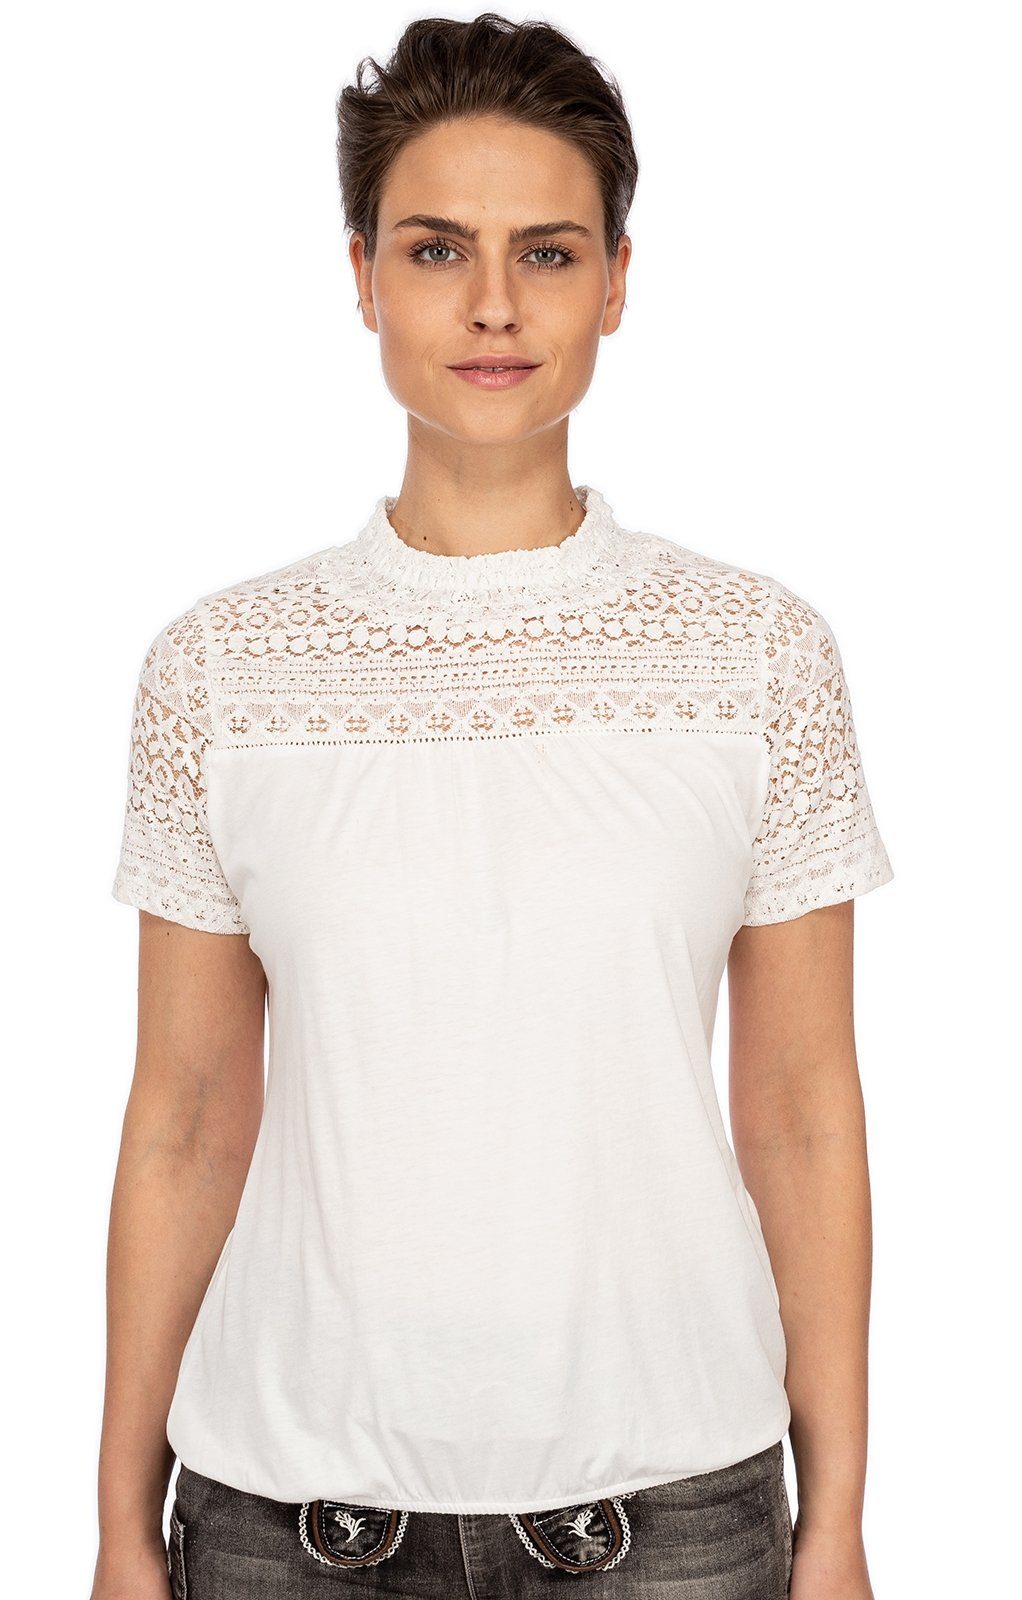 WEDIS T-Shirt offwhite Blusenshirt Hangowear